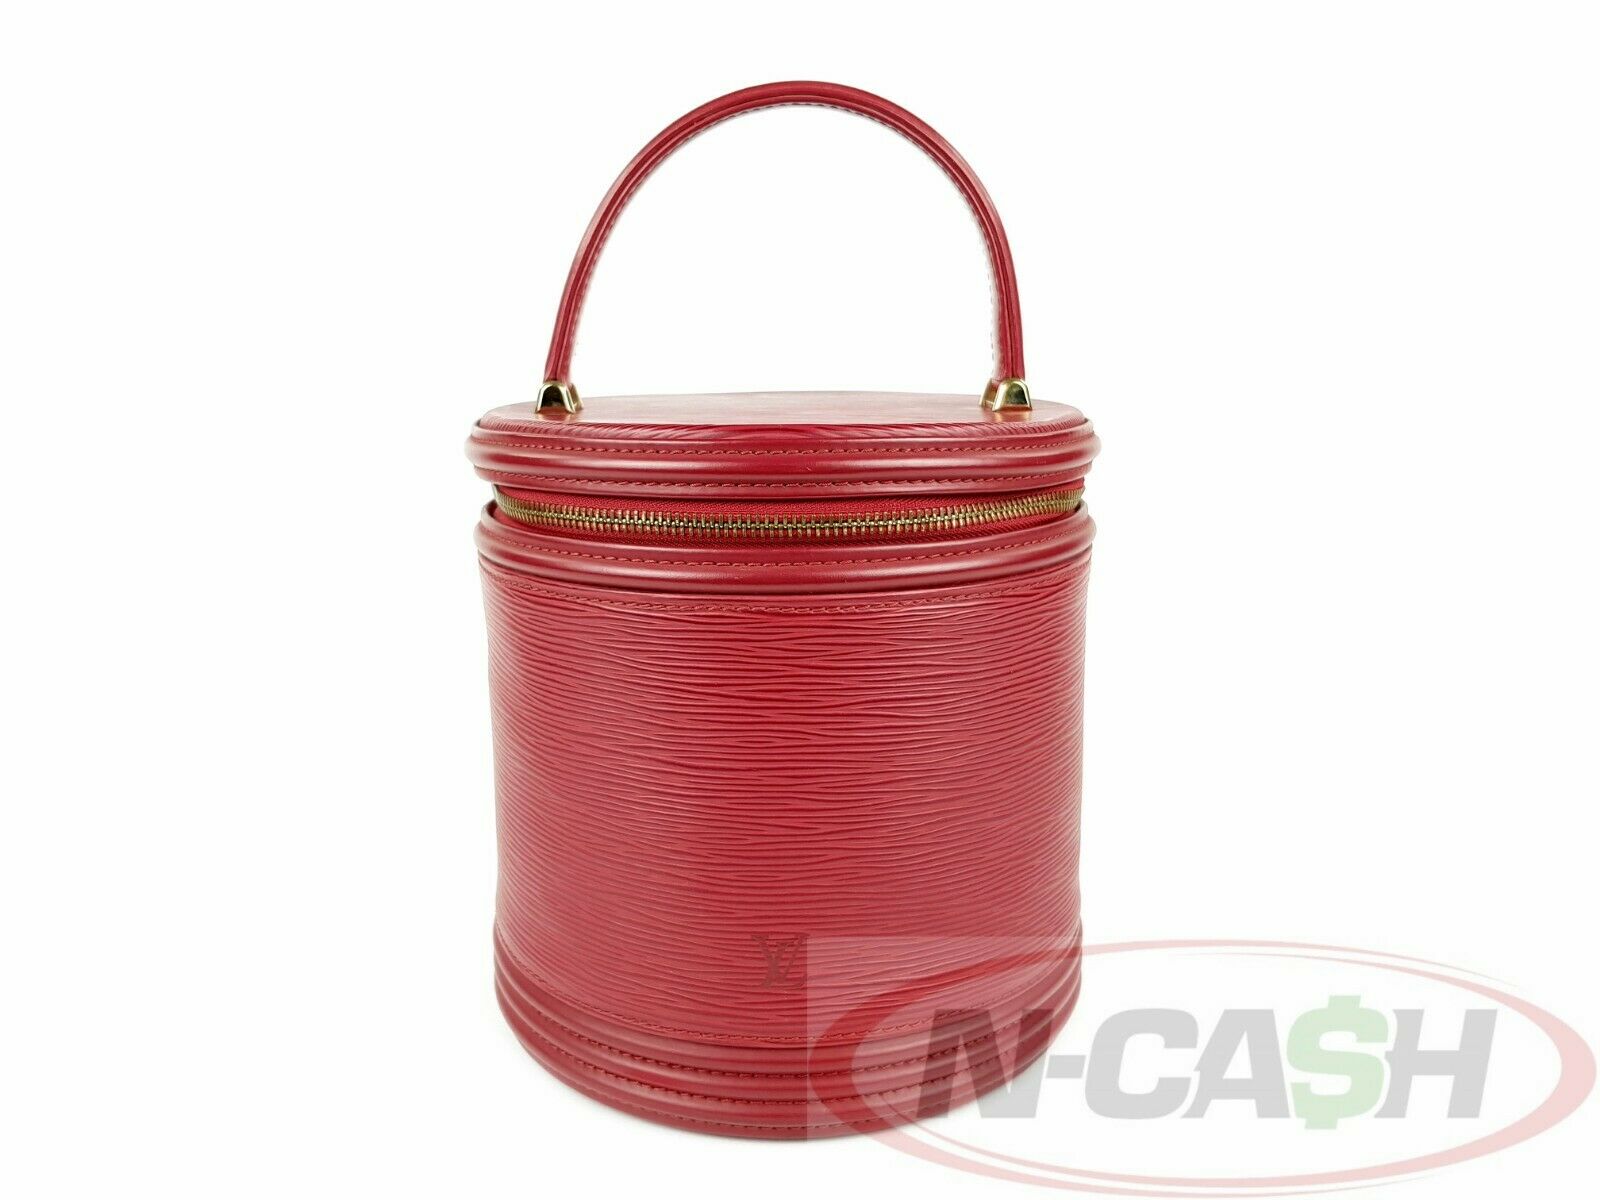 Louis Vuitton Epi Cannes Rouge Vanity Bag - Red Handle Bags